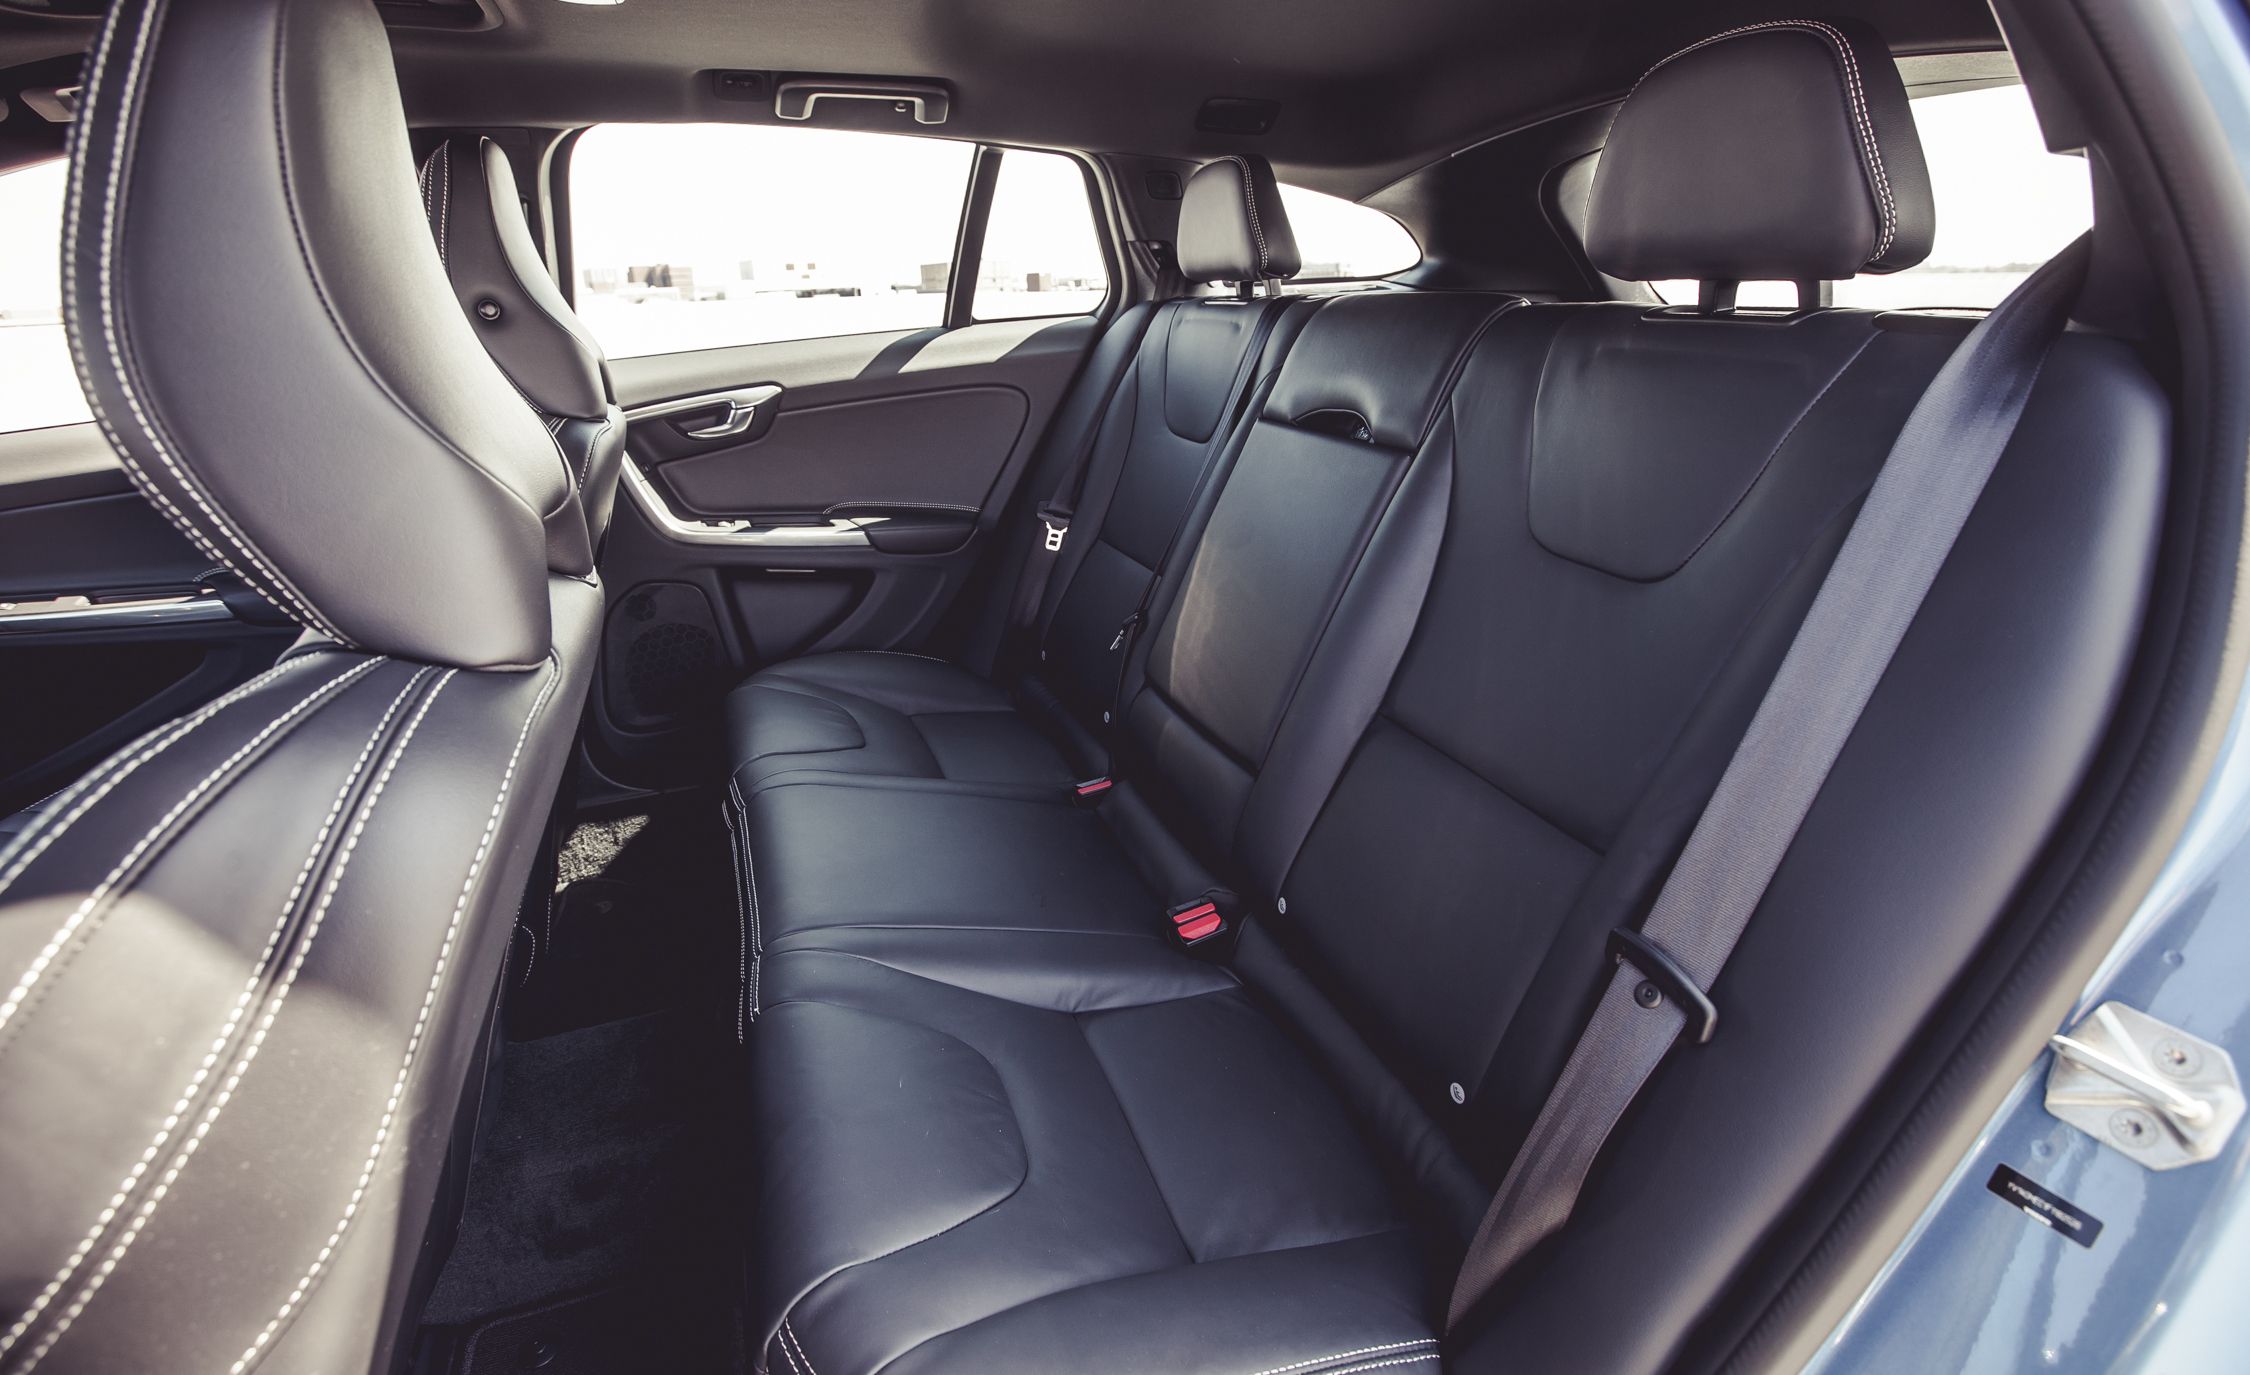 2015 Volvo V60 Interior (View 1 of 38)